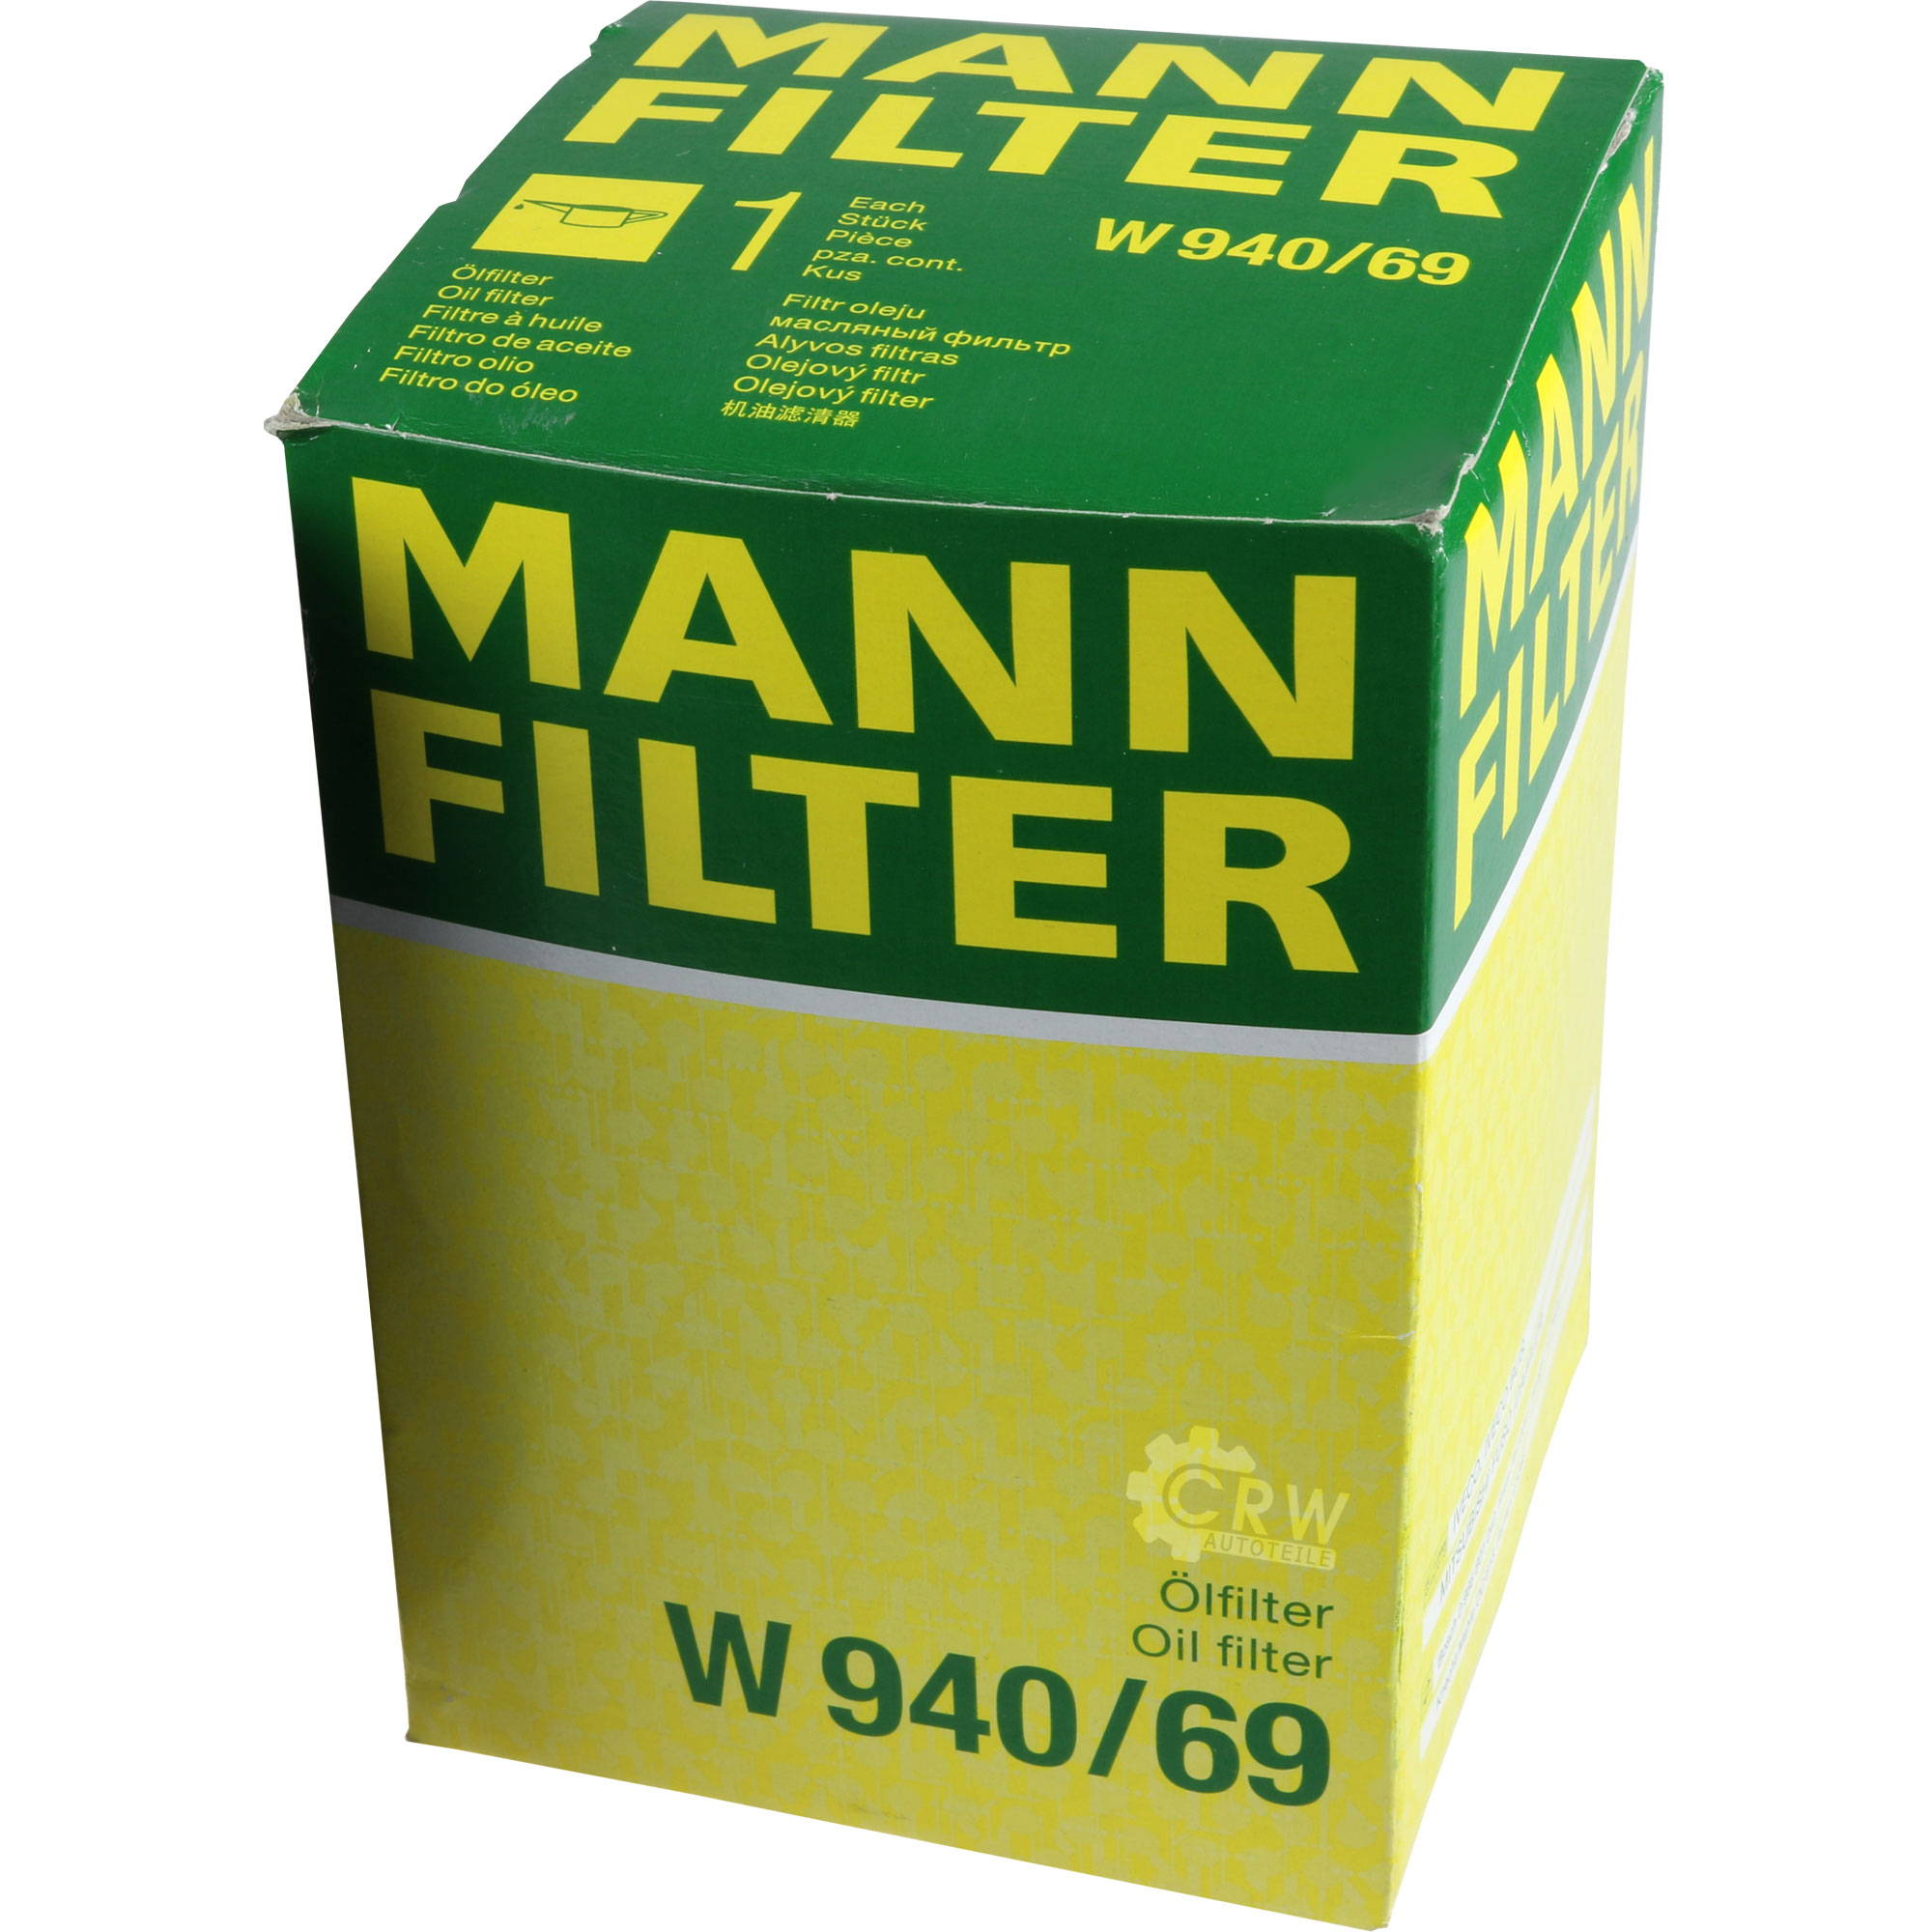 MANN-FILTER Ölfilter Oelfilter W 940/69 Oil Filter